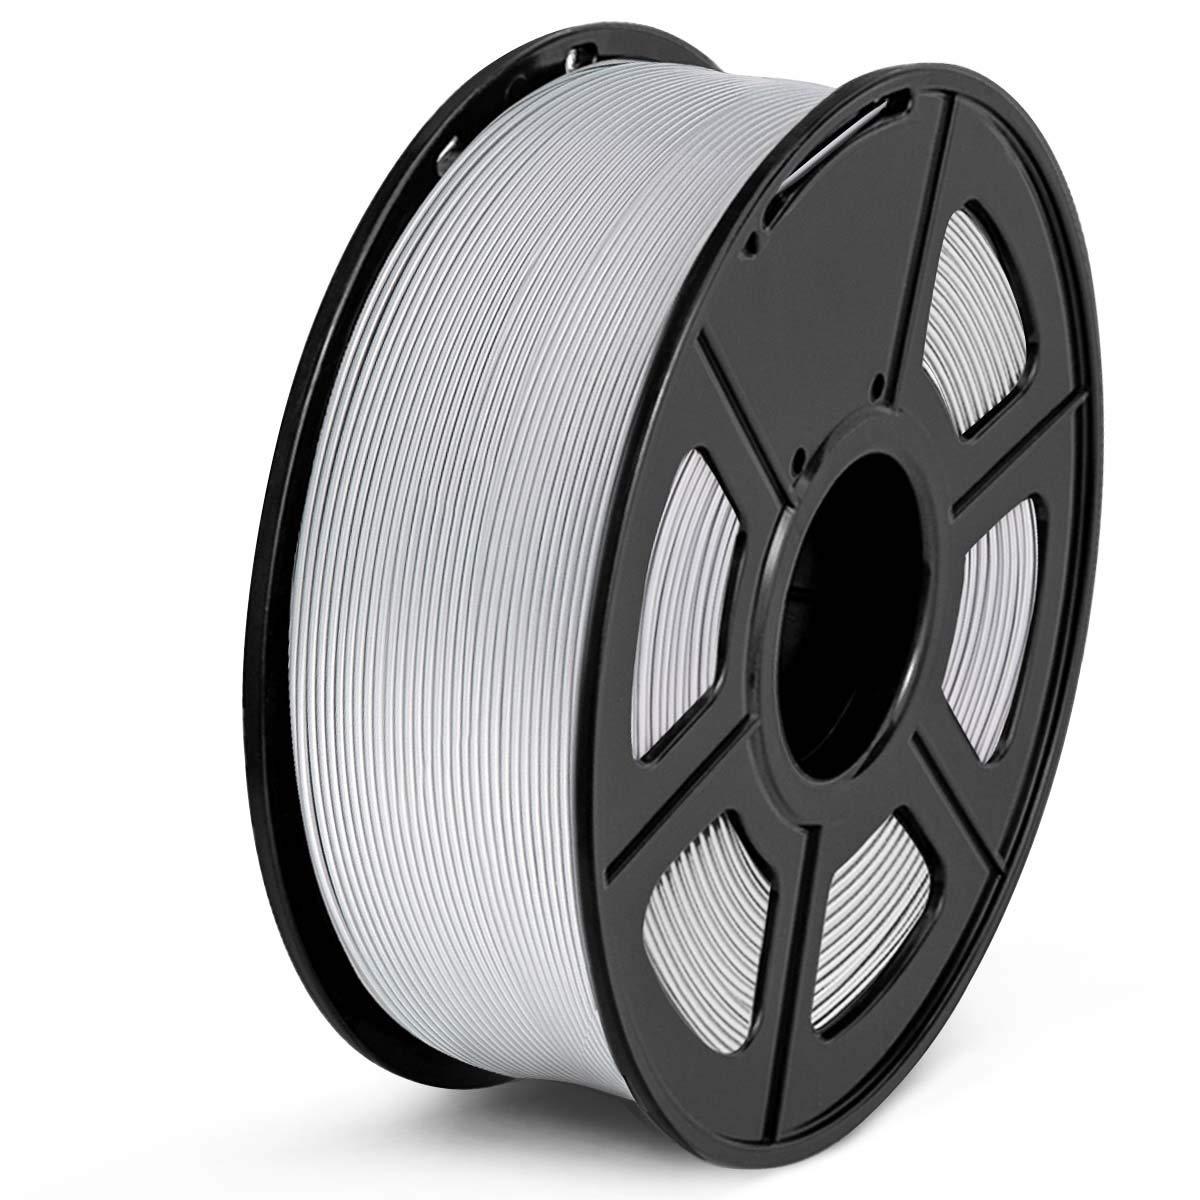 Silver PLA 3D Printer Filament 1.75mm PLA 1Kg Spool (2.2lbs), Dimensional Accuracy of +/- 0.02mm